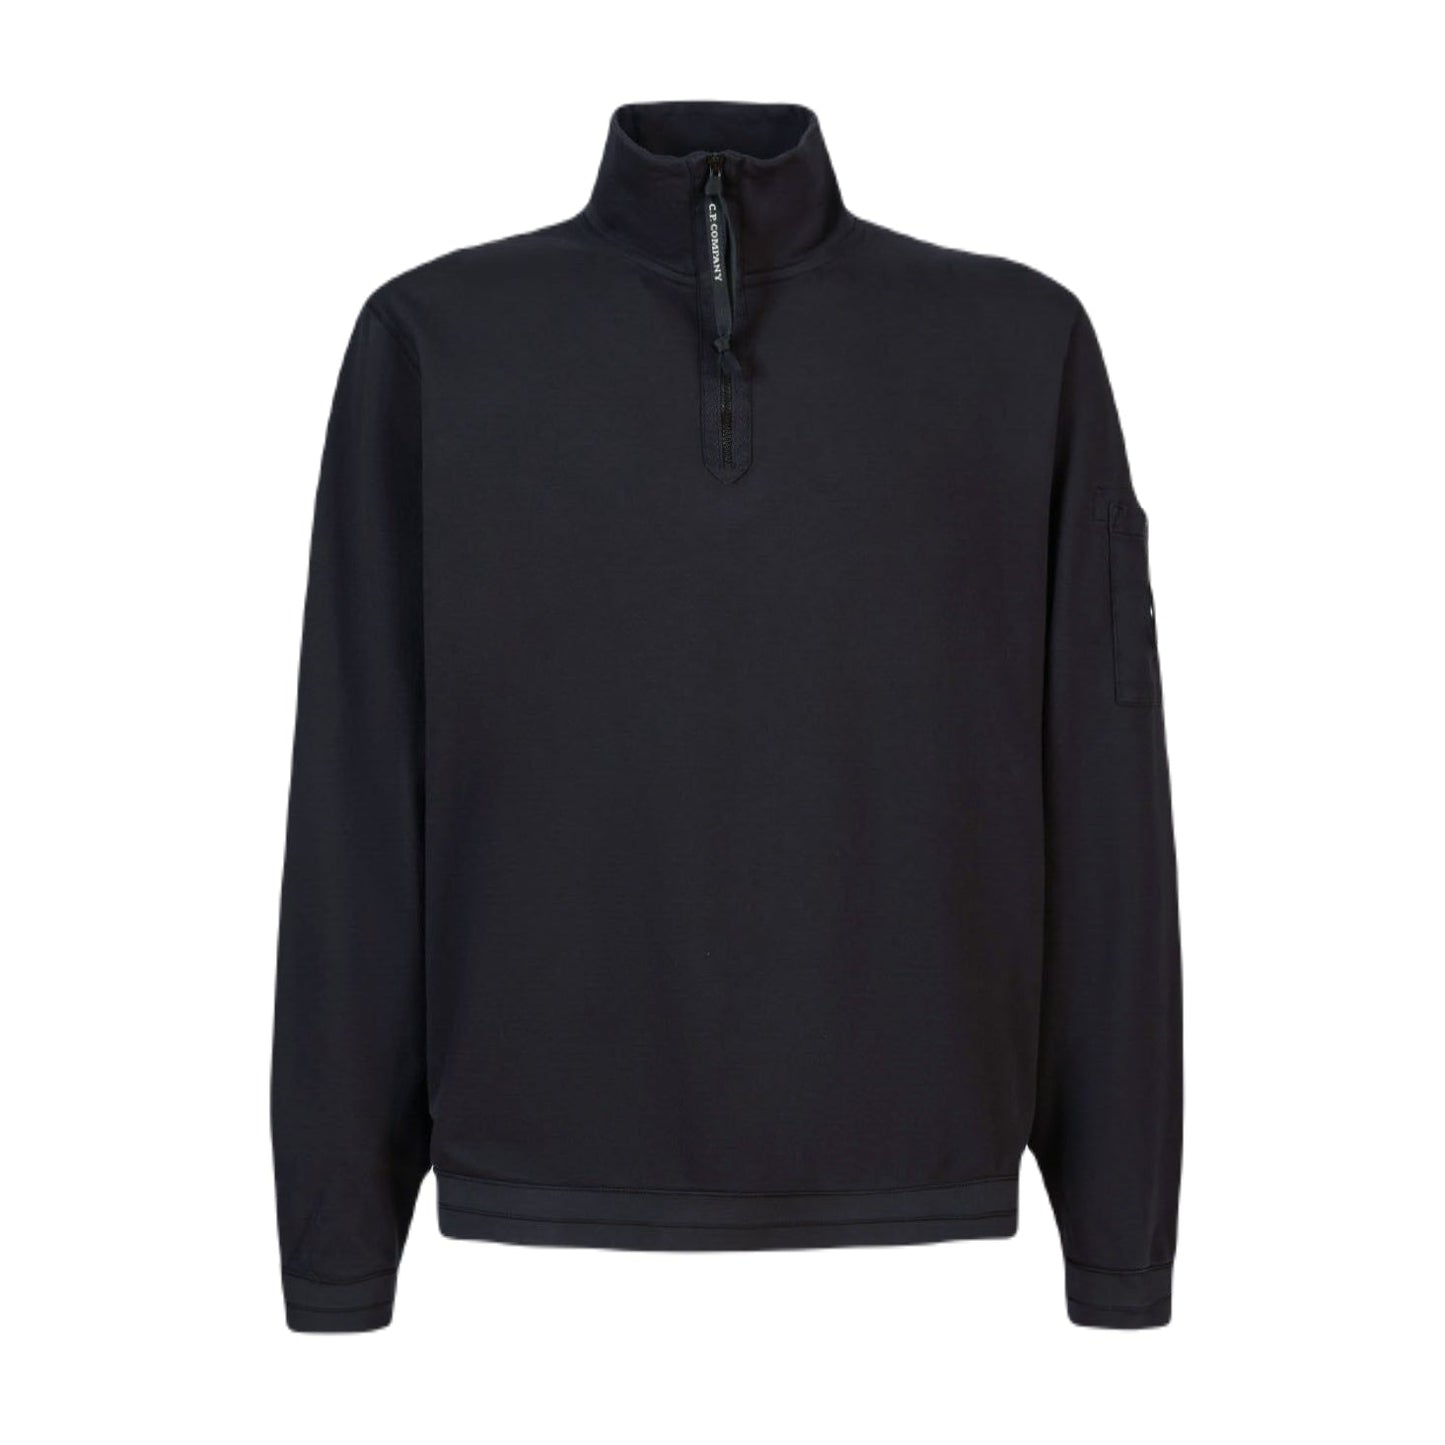 C.P. Company Light Fleece Zipped Sweatshirt - 999 Black - Escape Menswear